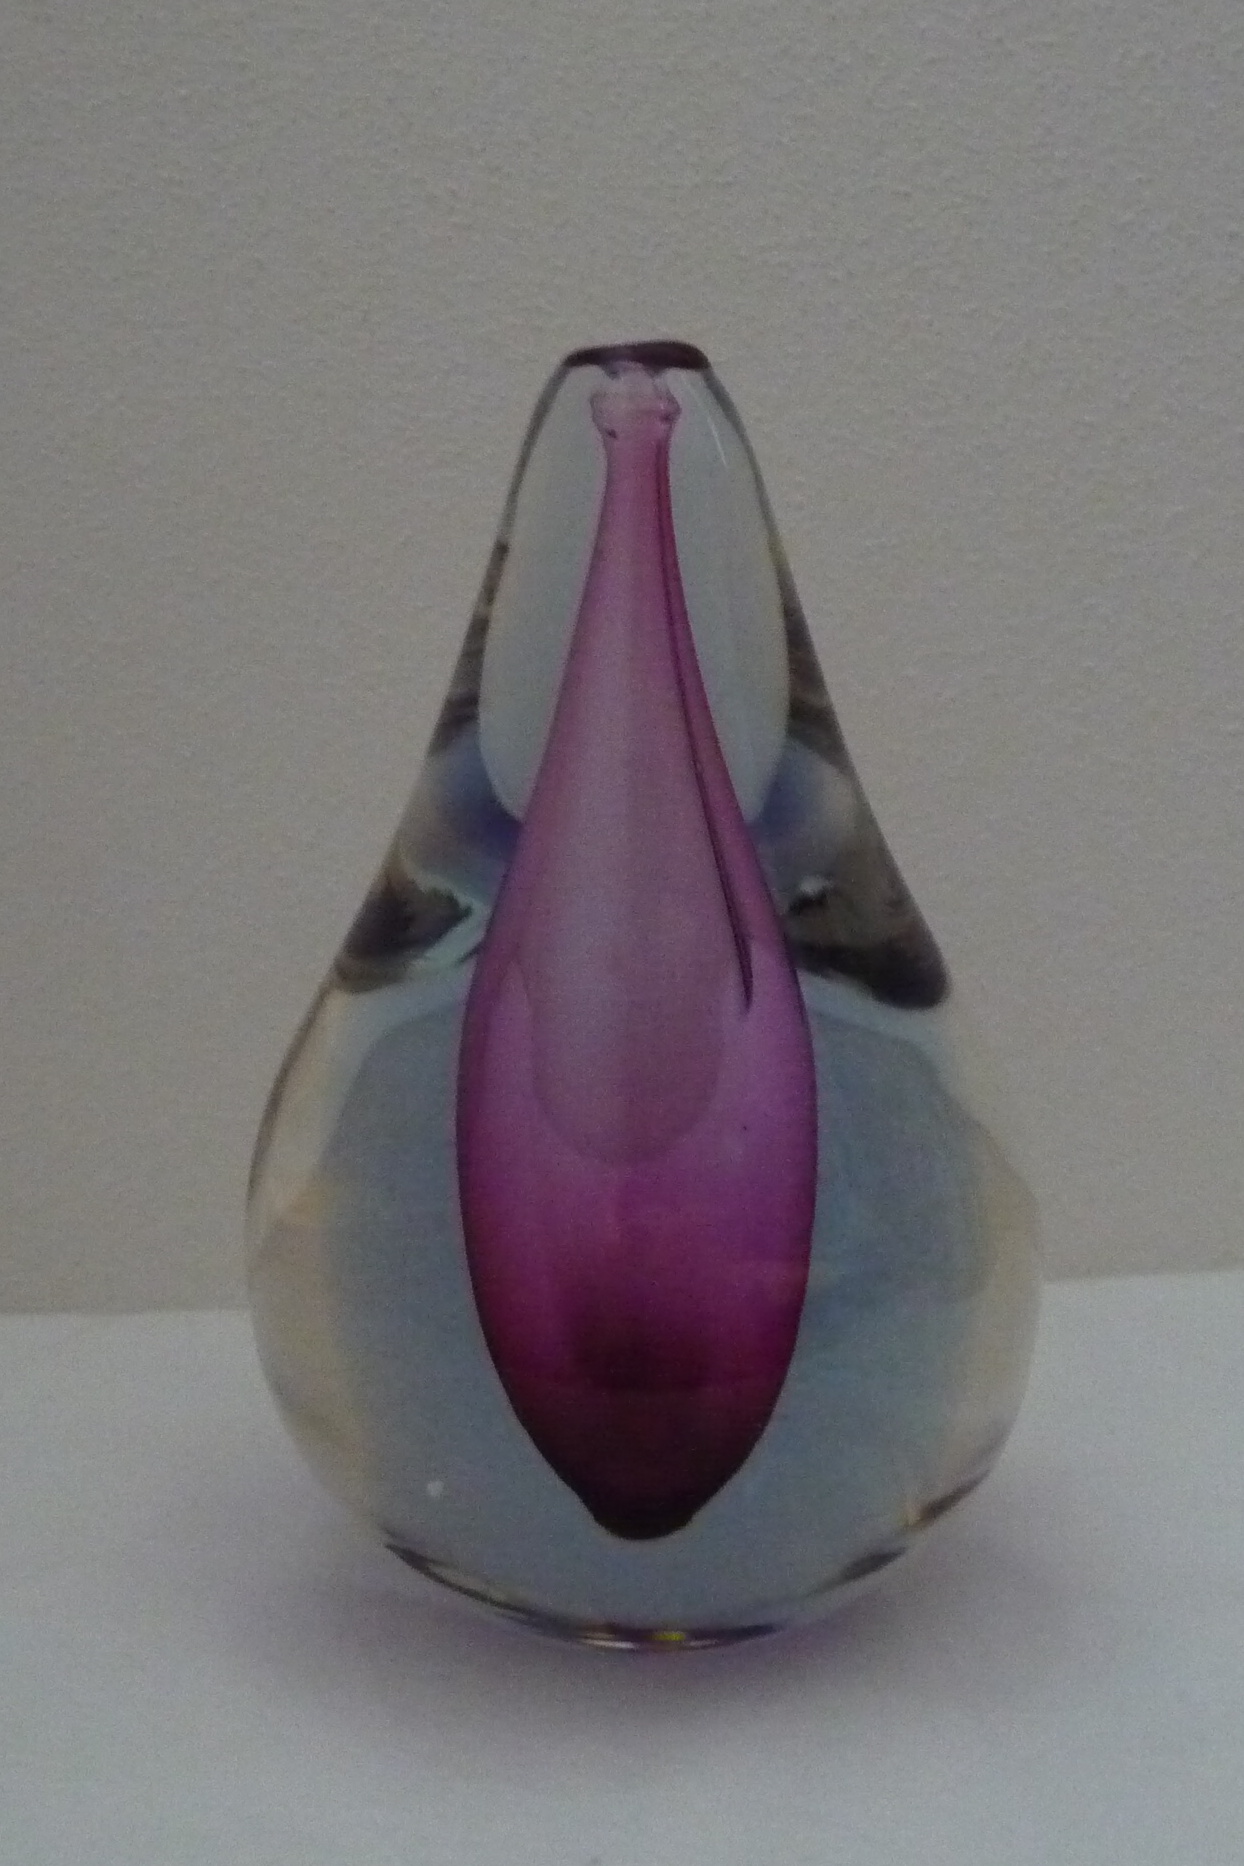 L. Blecha - 5733, Vase